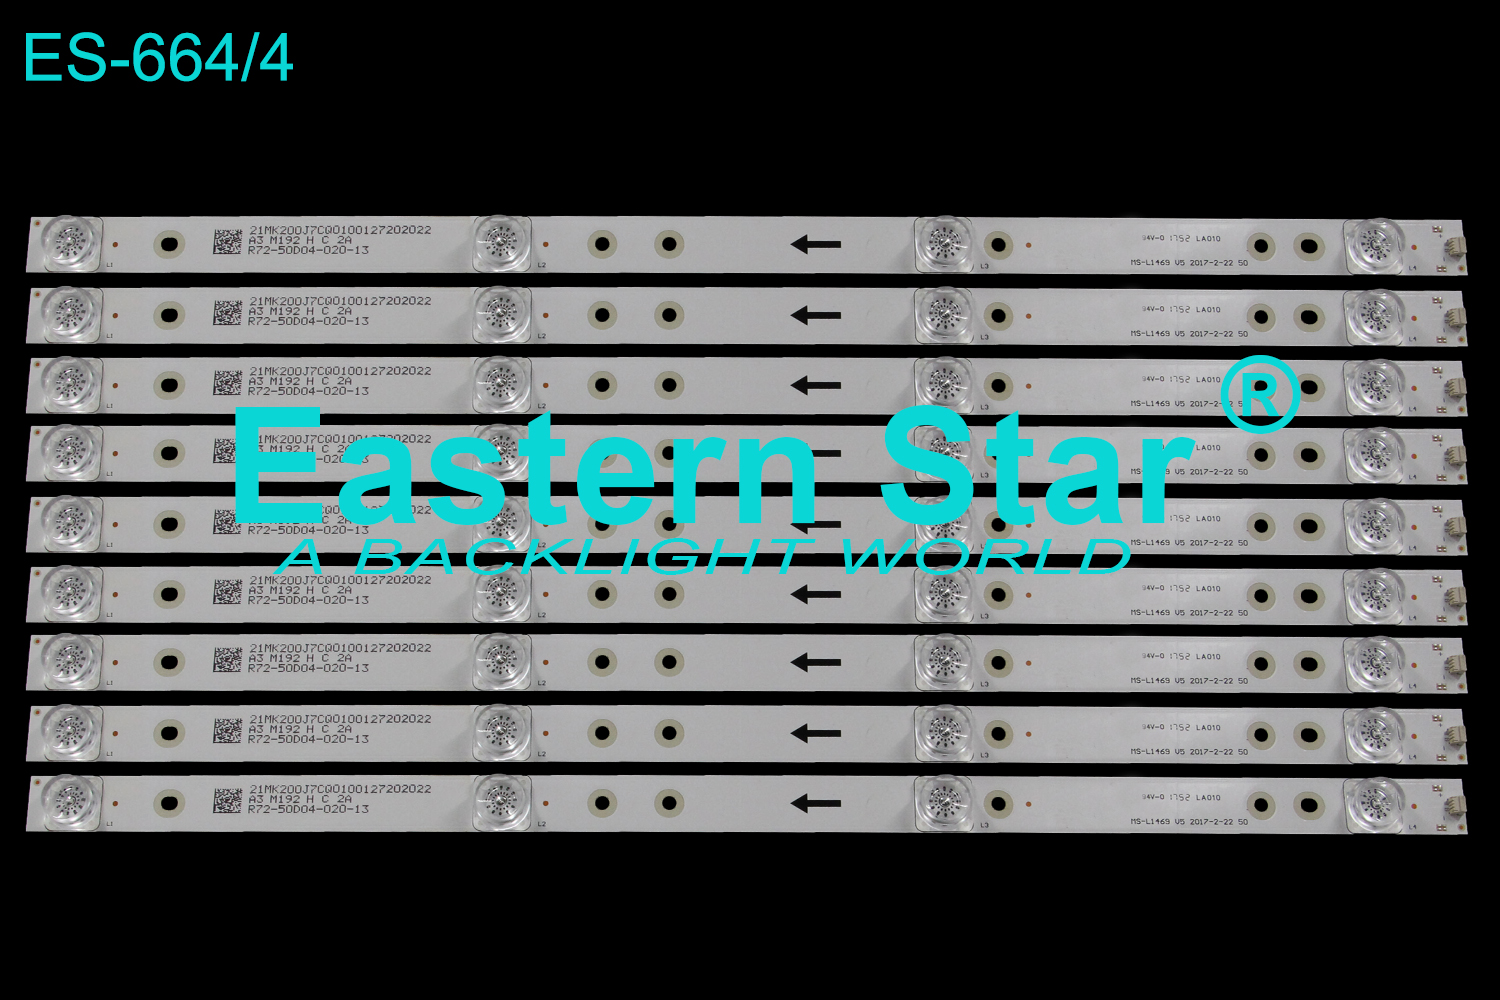 ES-664 LED TV Backlight use for 50" Asanzo MS-L 1469 V5 2017-2-22 50 R72-50D04-020-13 LED STRIPS(9)